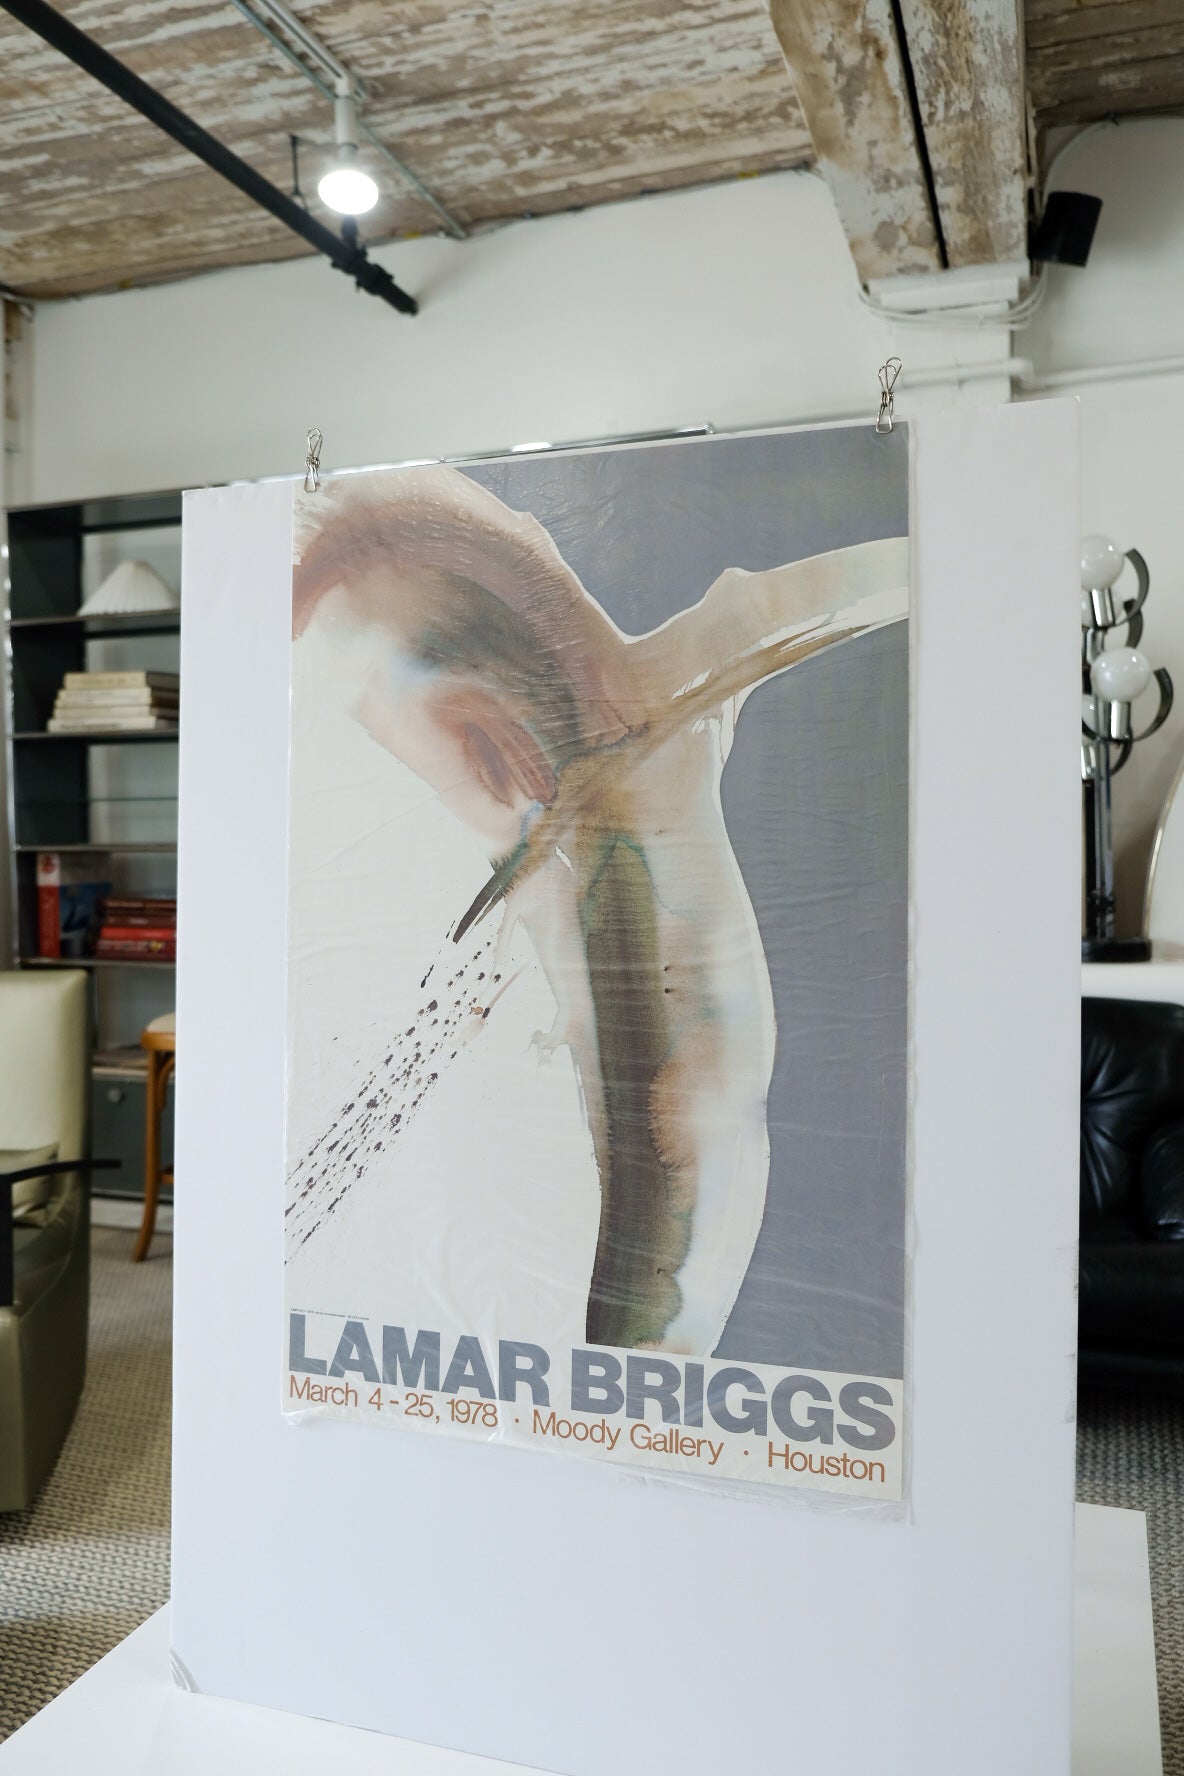 Lamar Briggs Print from Moody Gallery Houston